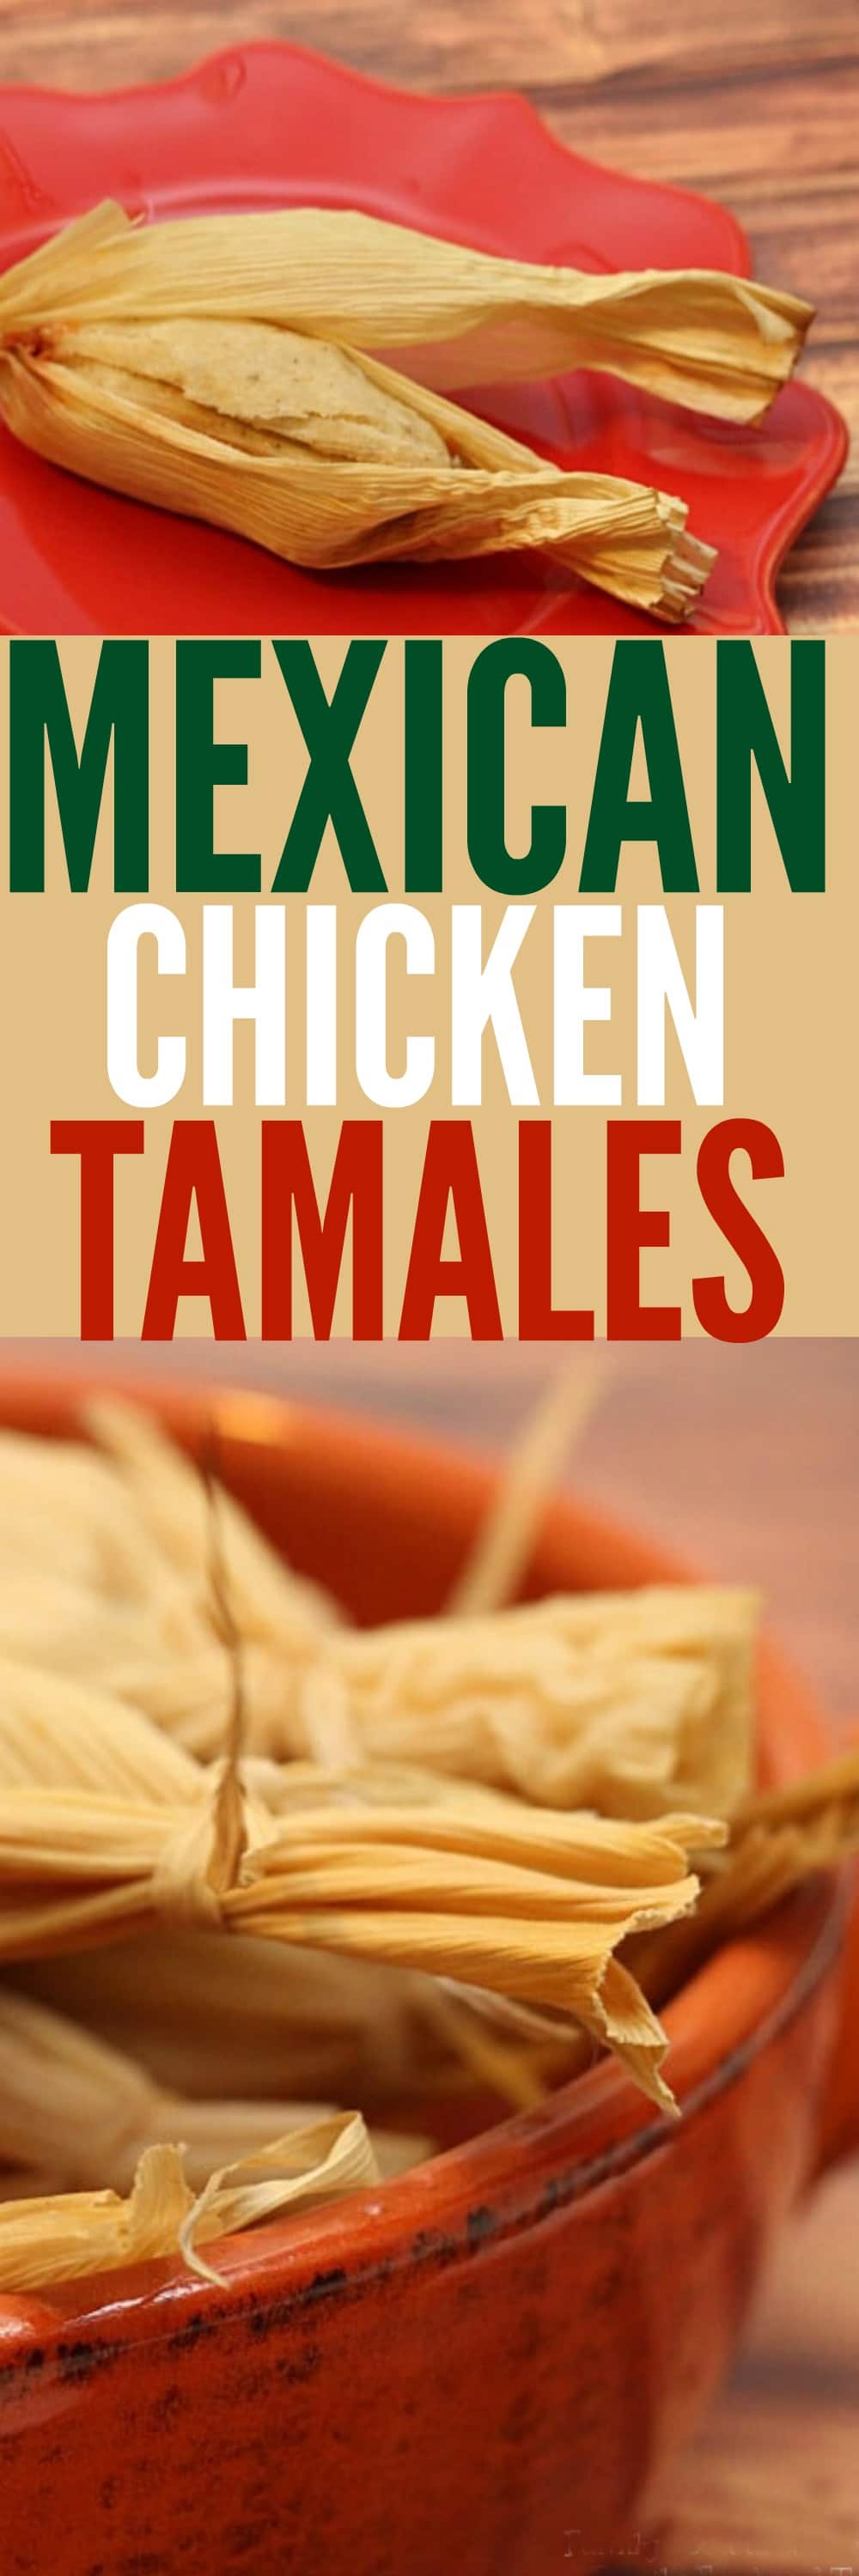 Mexican Chicken Tamales Recipe